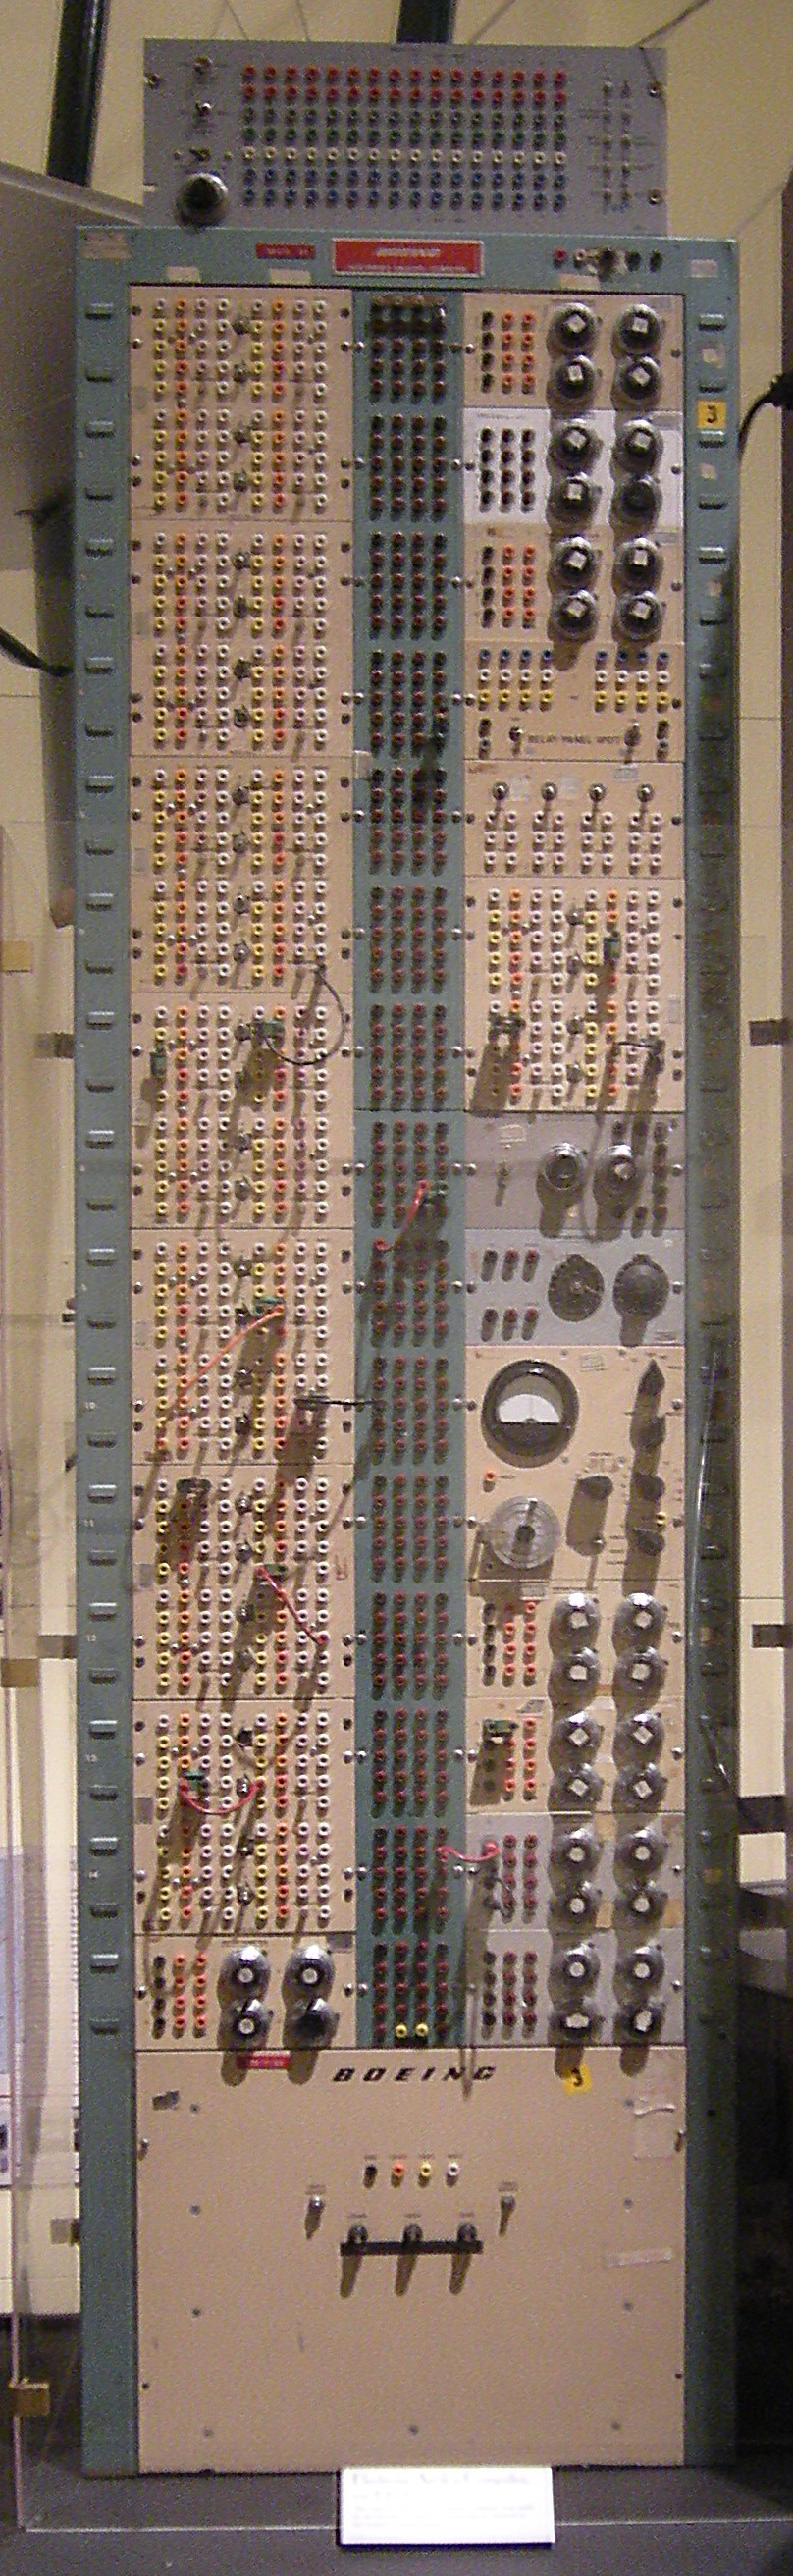 MOHAI - analog computer 01A